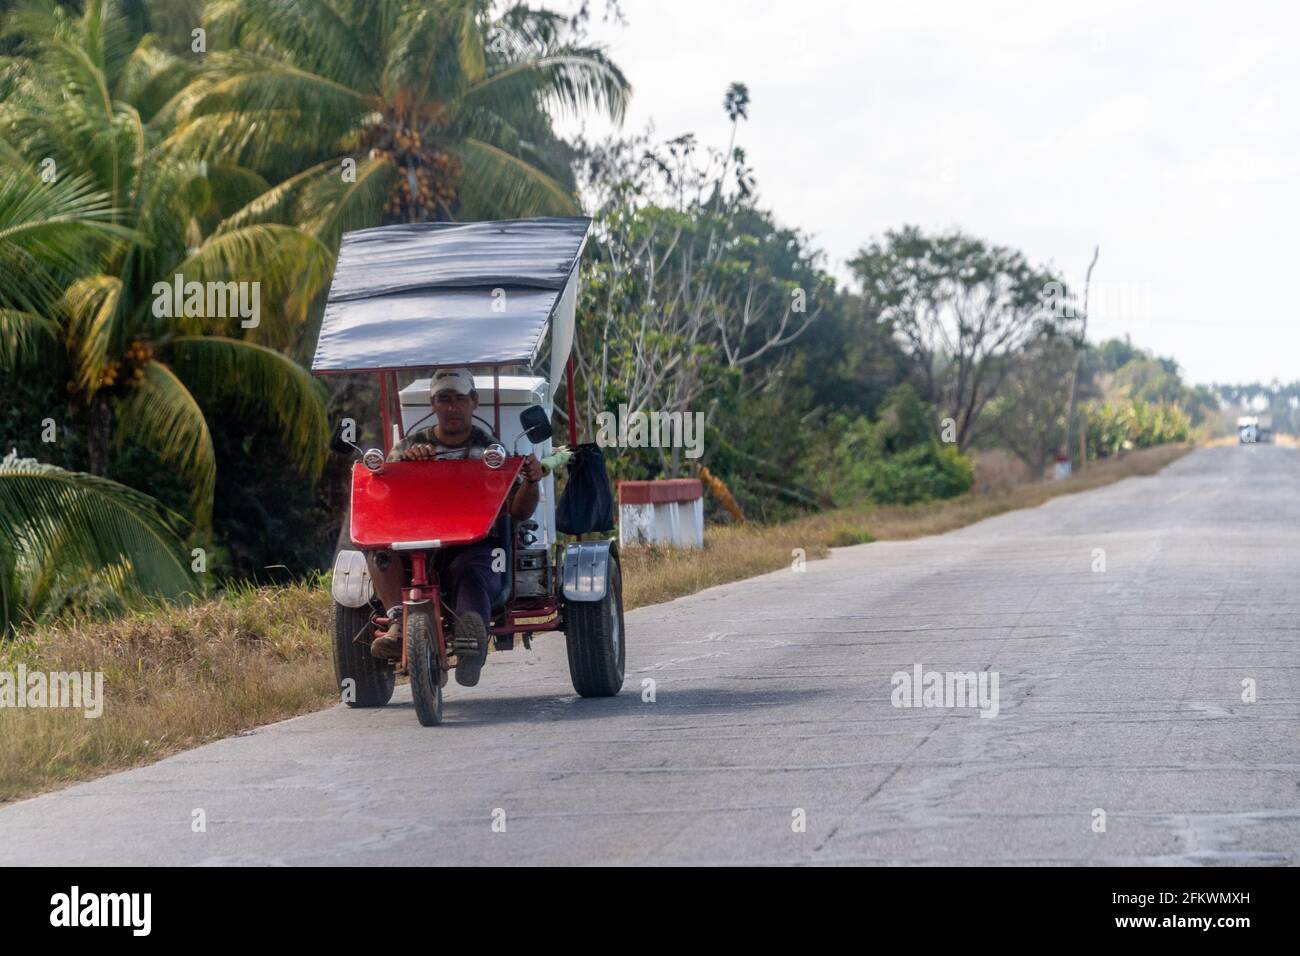 Bici-taxi or pedicab in rural road, Cuba Stock Photo